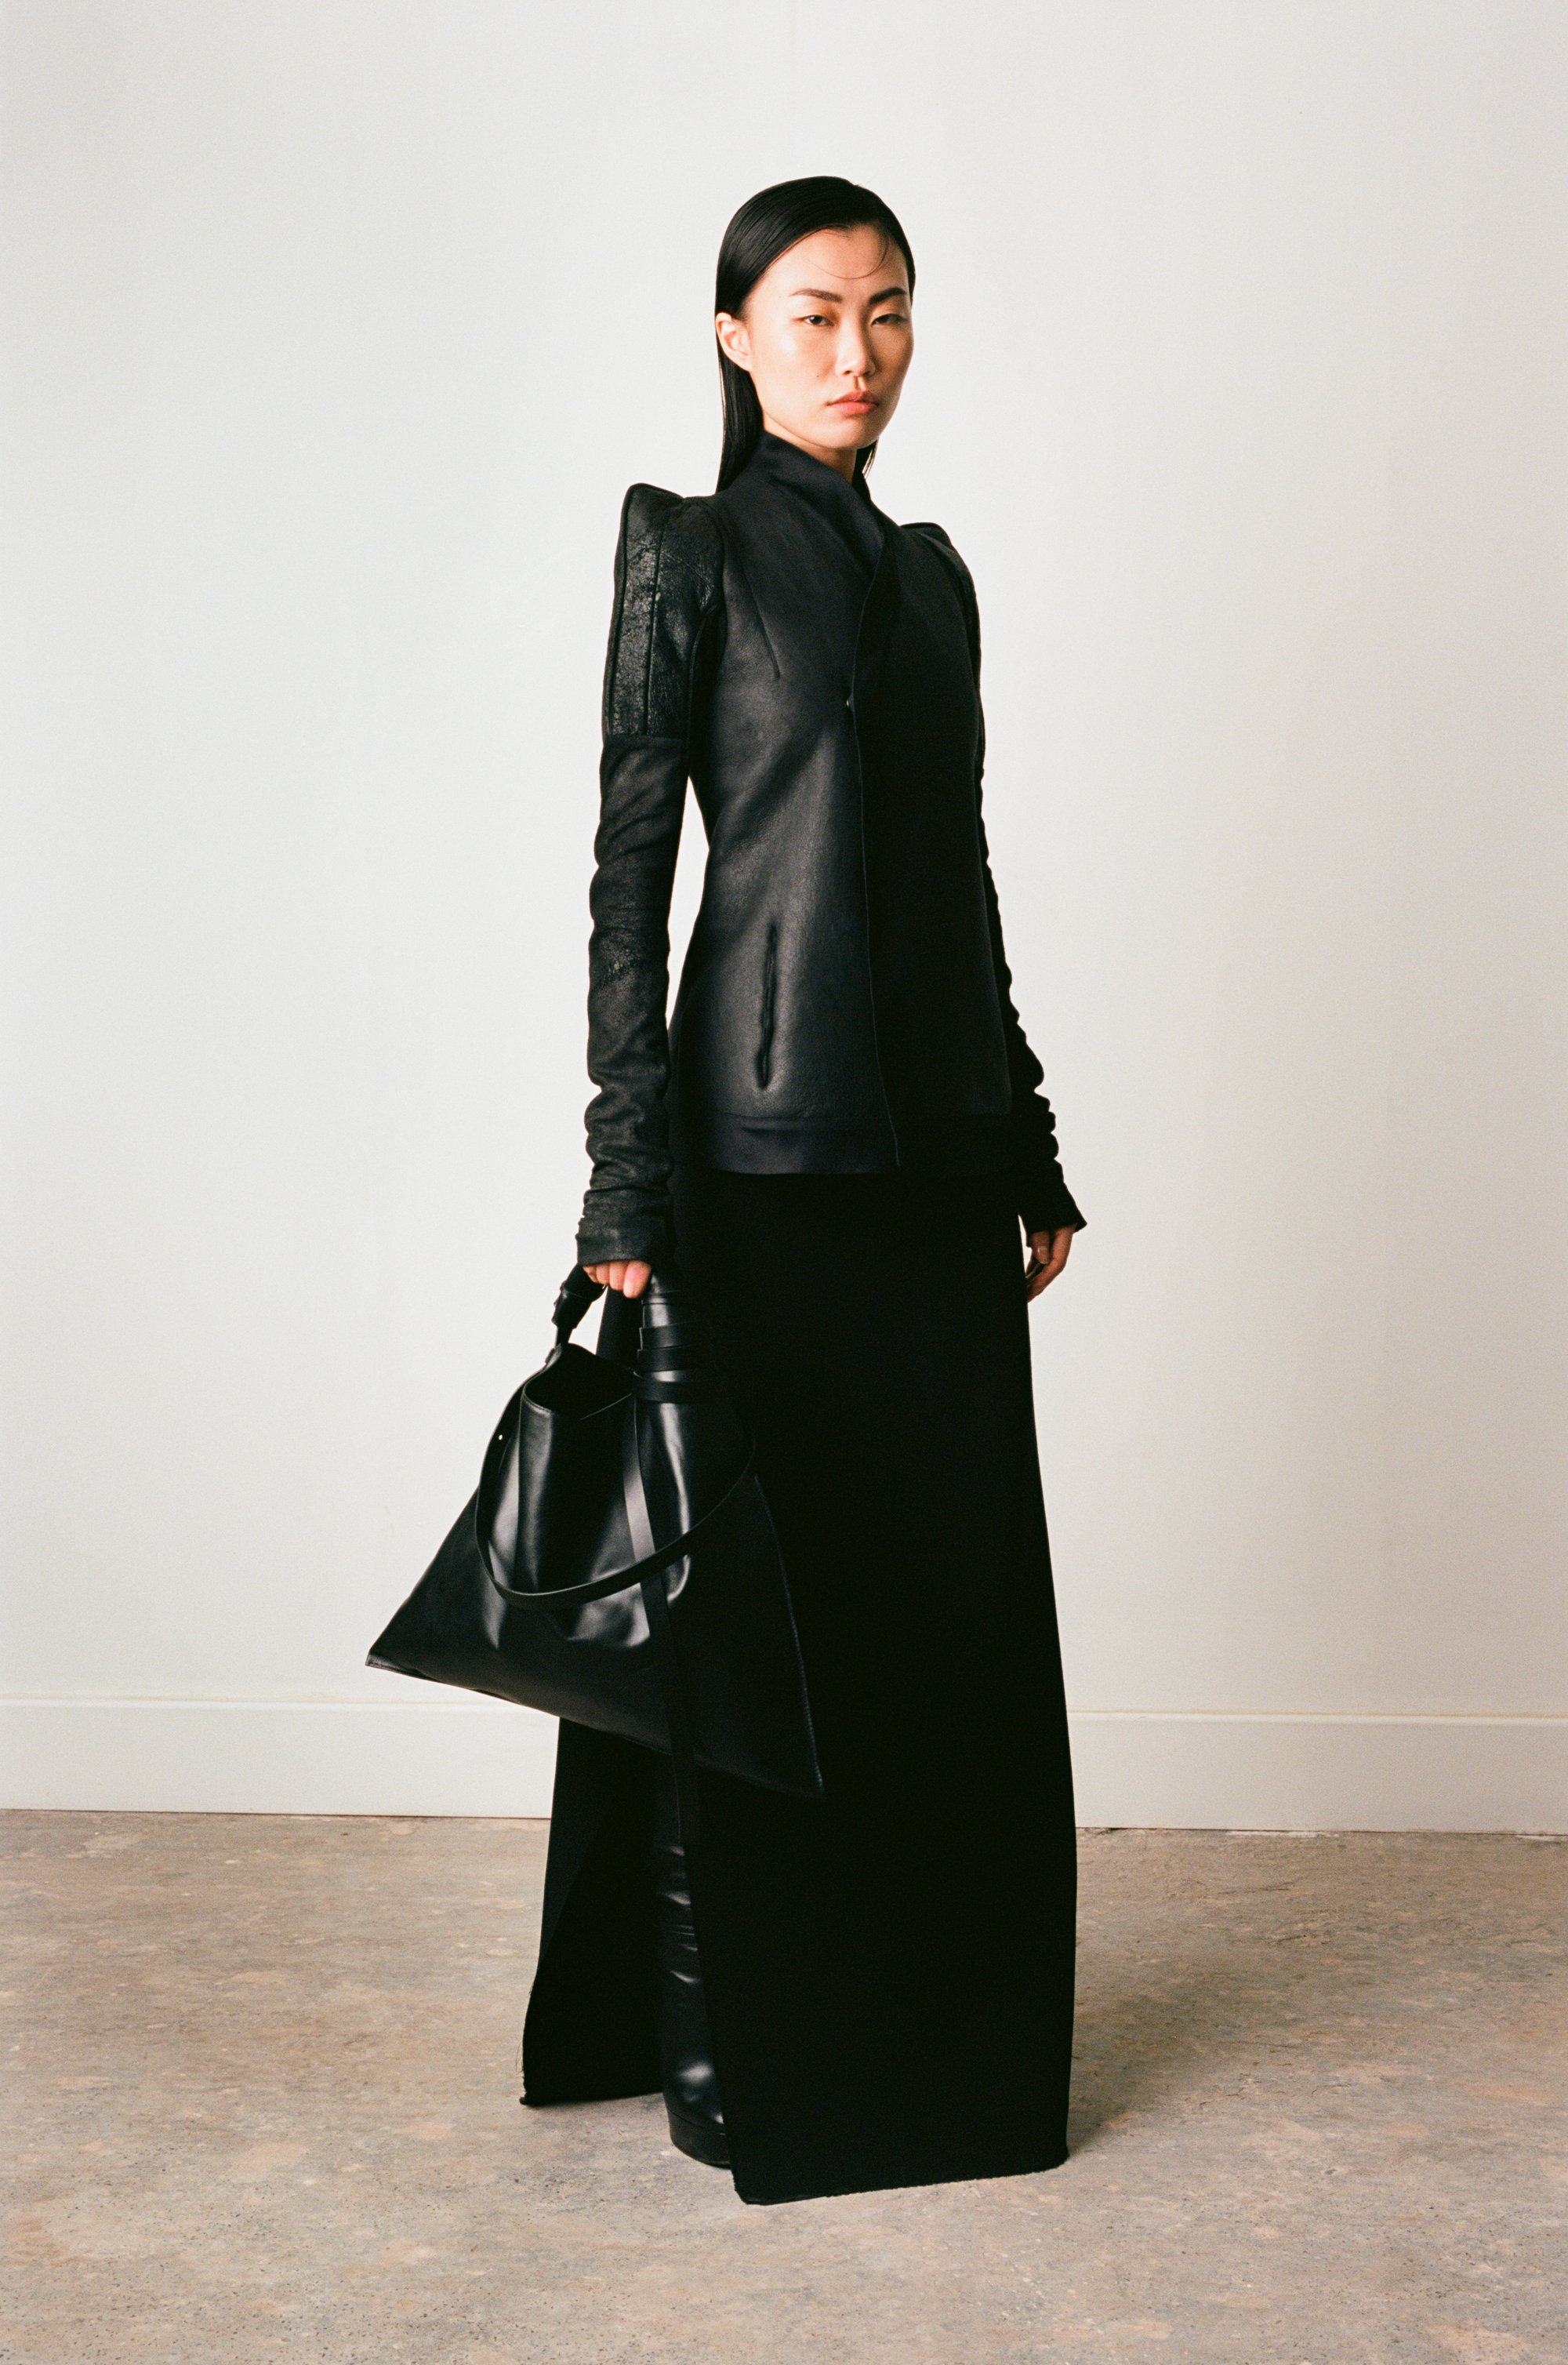 Kikiito-houseofito-sanagi-large-black-leather-tote-handbag-bag-made-in-England-Uk-styling-craftsmanship-handmade-avantgarde-Japanese-London-accessories-minimalist-design-sustainable-slow-fashion-brand-one-of-a-kind-editorial-photoshoot-model-Po-Hsuan.jpg